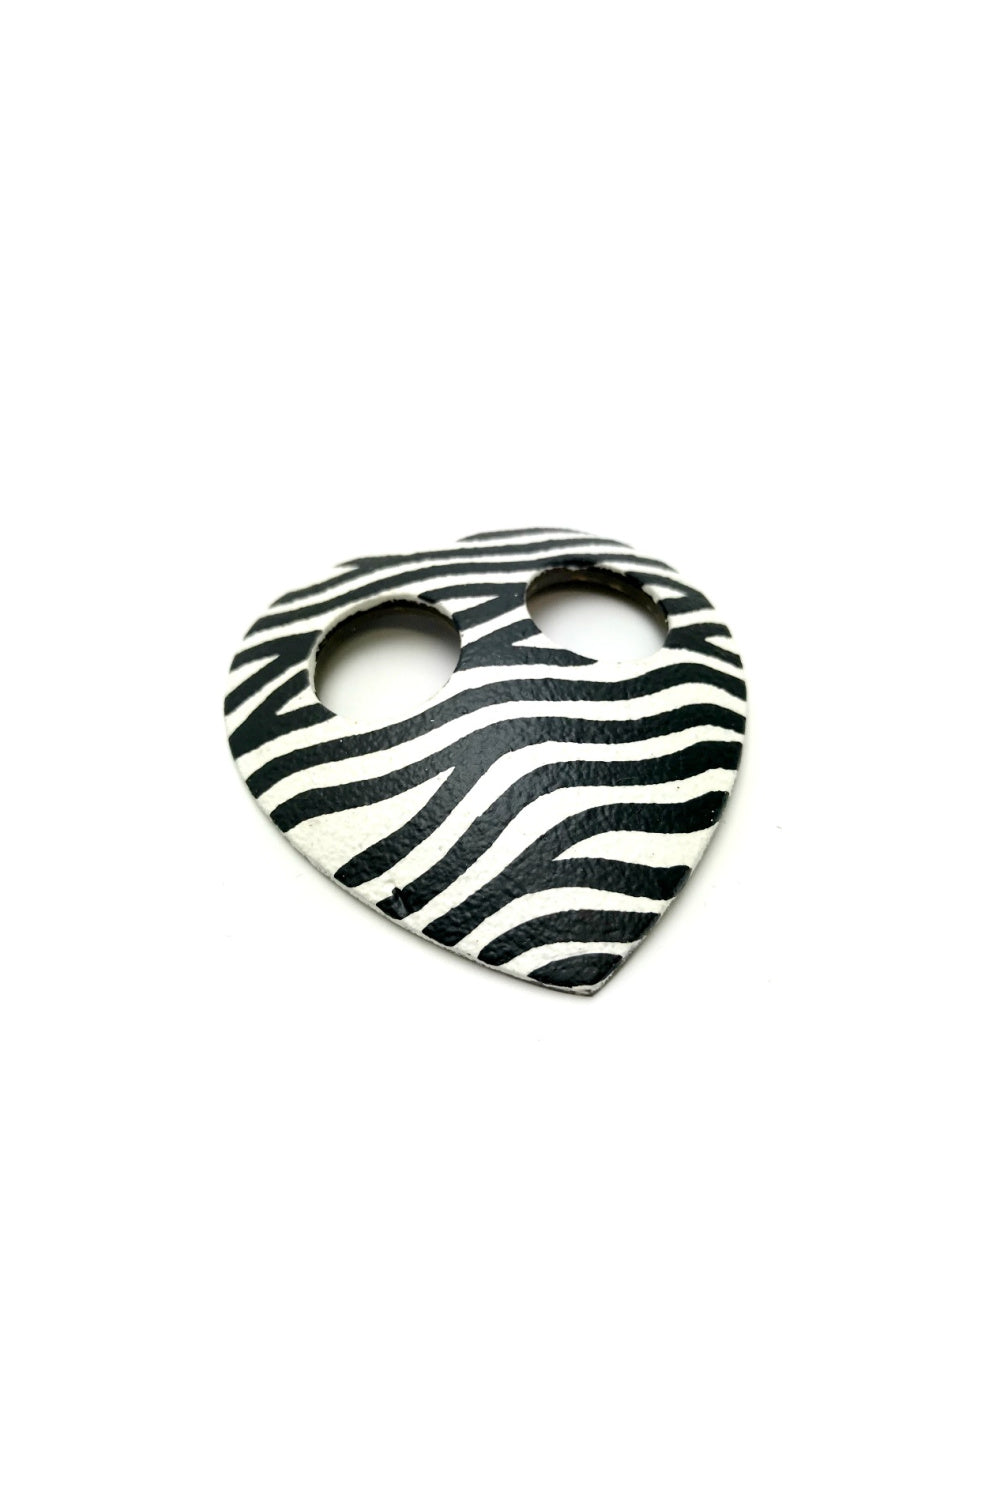 coconut-shell-sarong-buckles-zebra-hand-painted-heart-shape